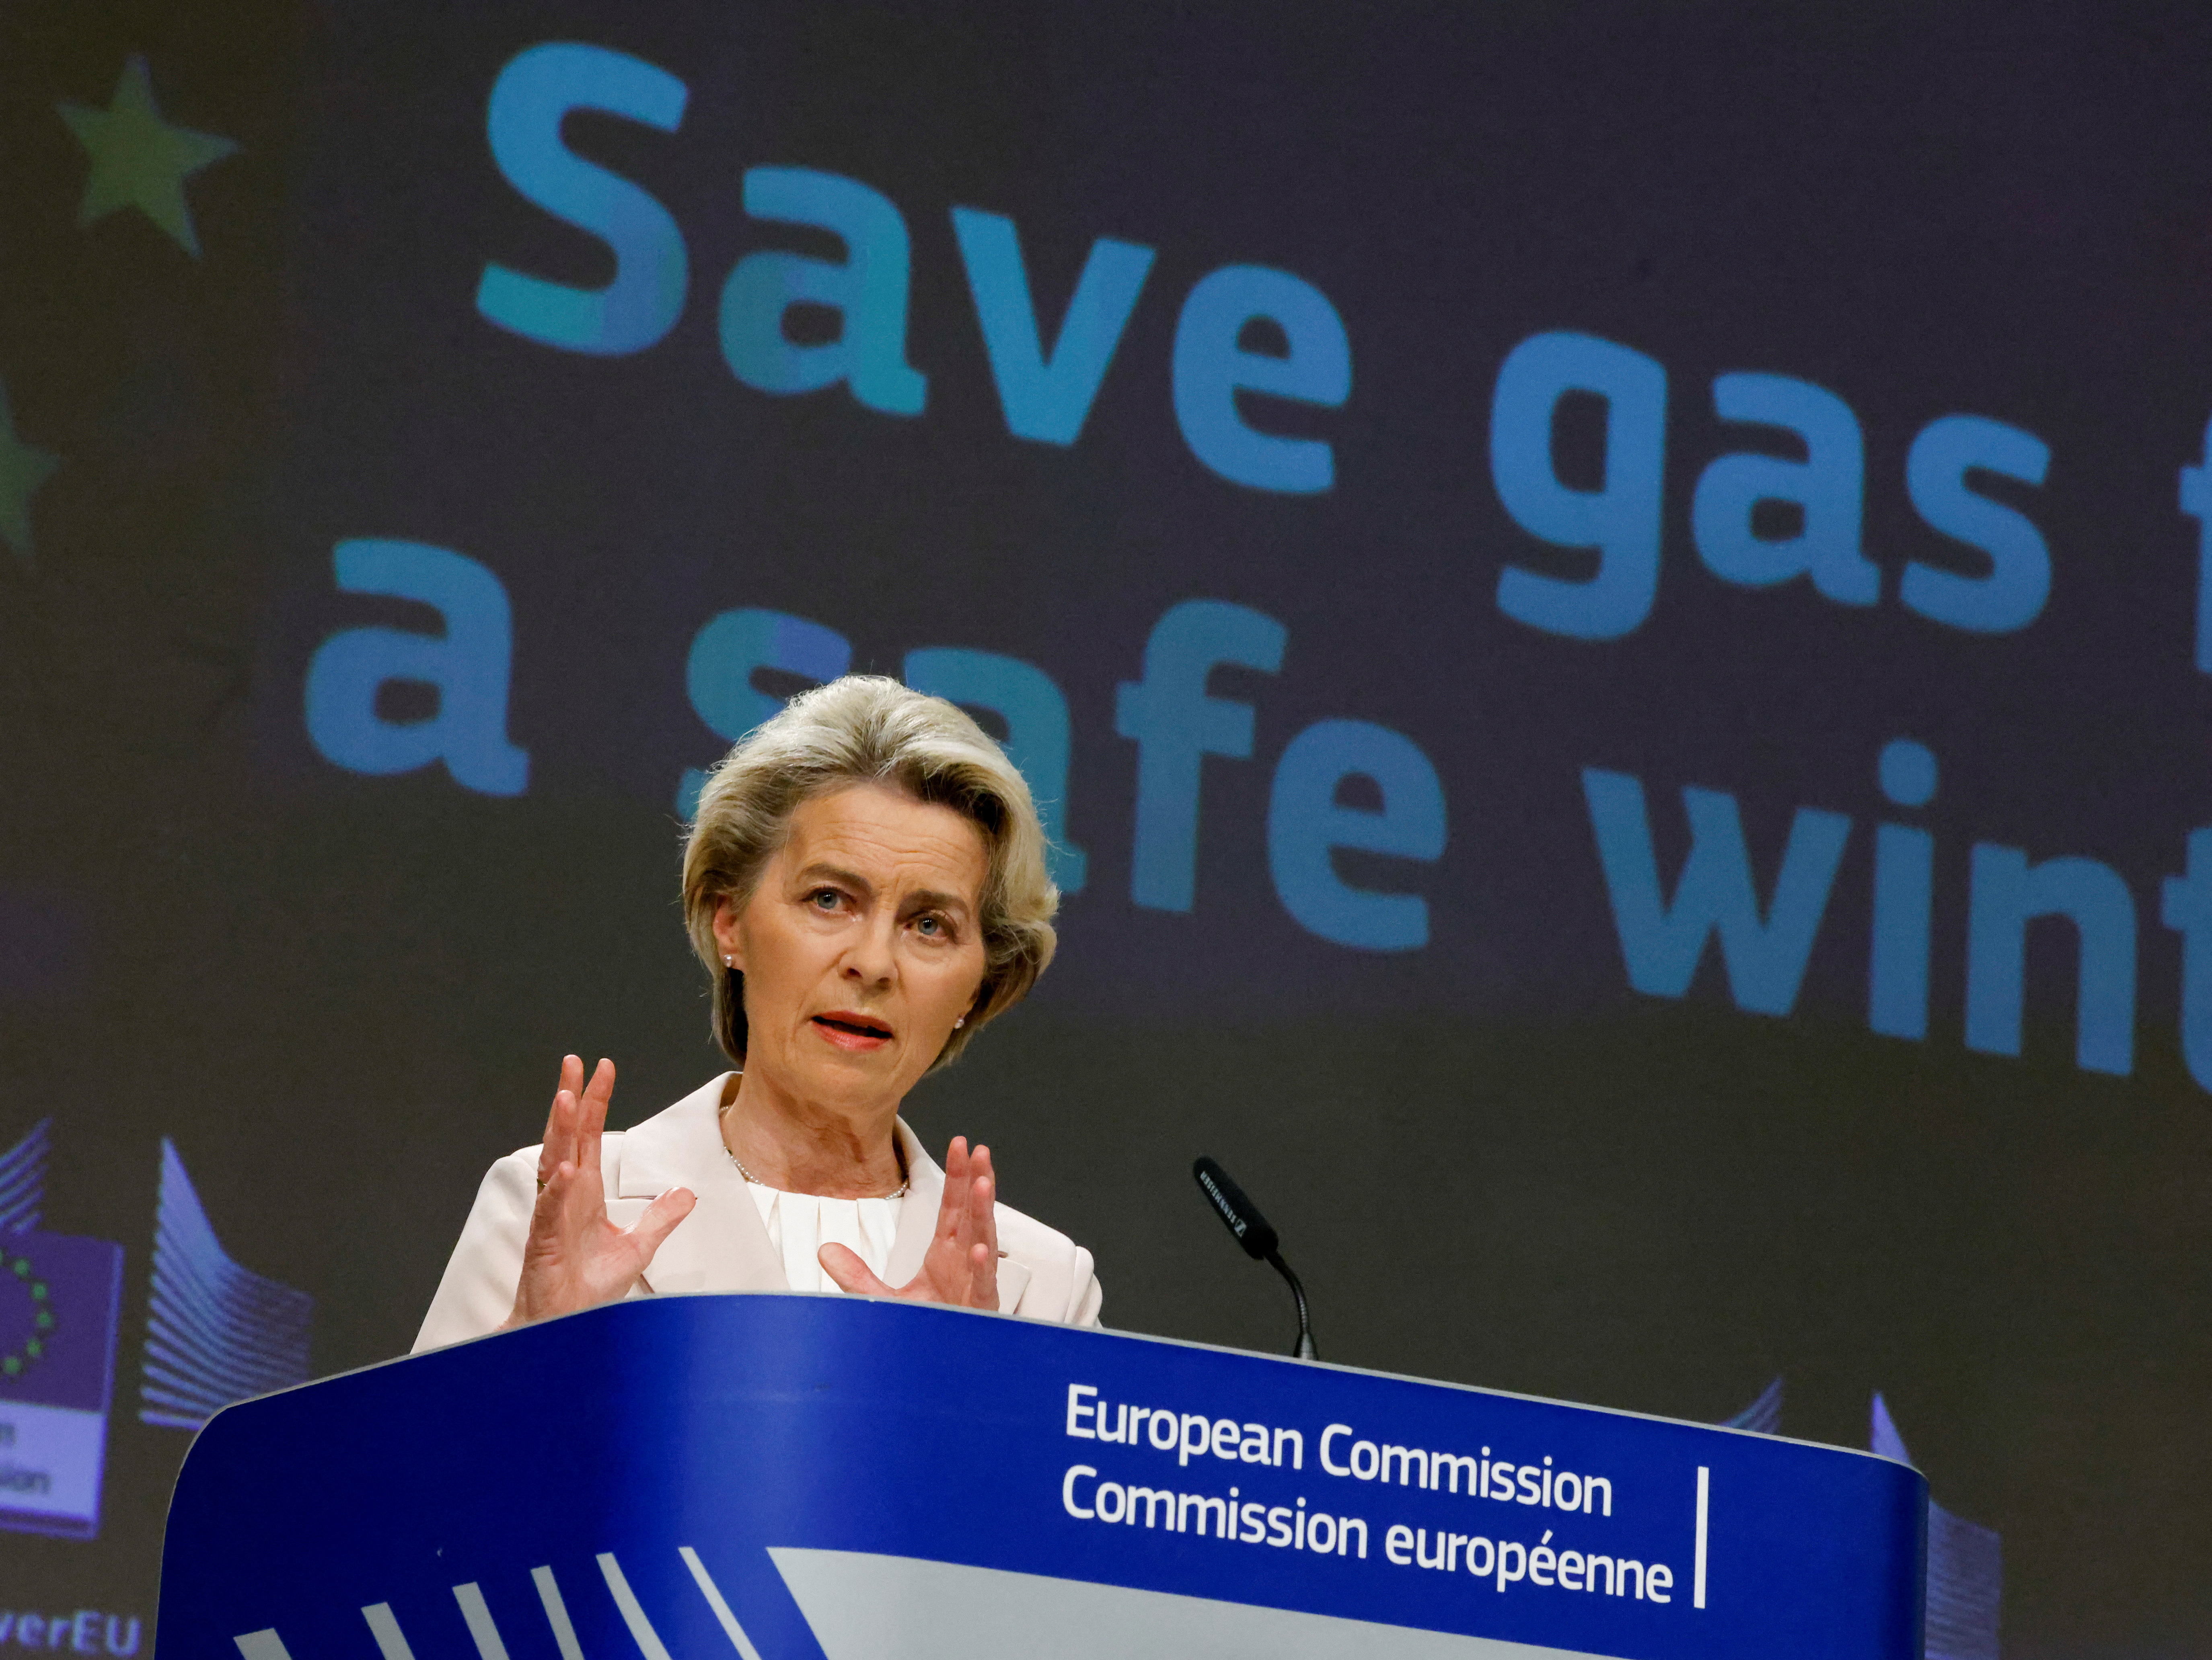 European Commission President Ursula von der Leyen speaks at a news conference in Brussels, Belgium July 20, 2022. REUTERS/Yves Herman